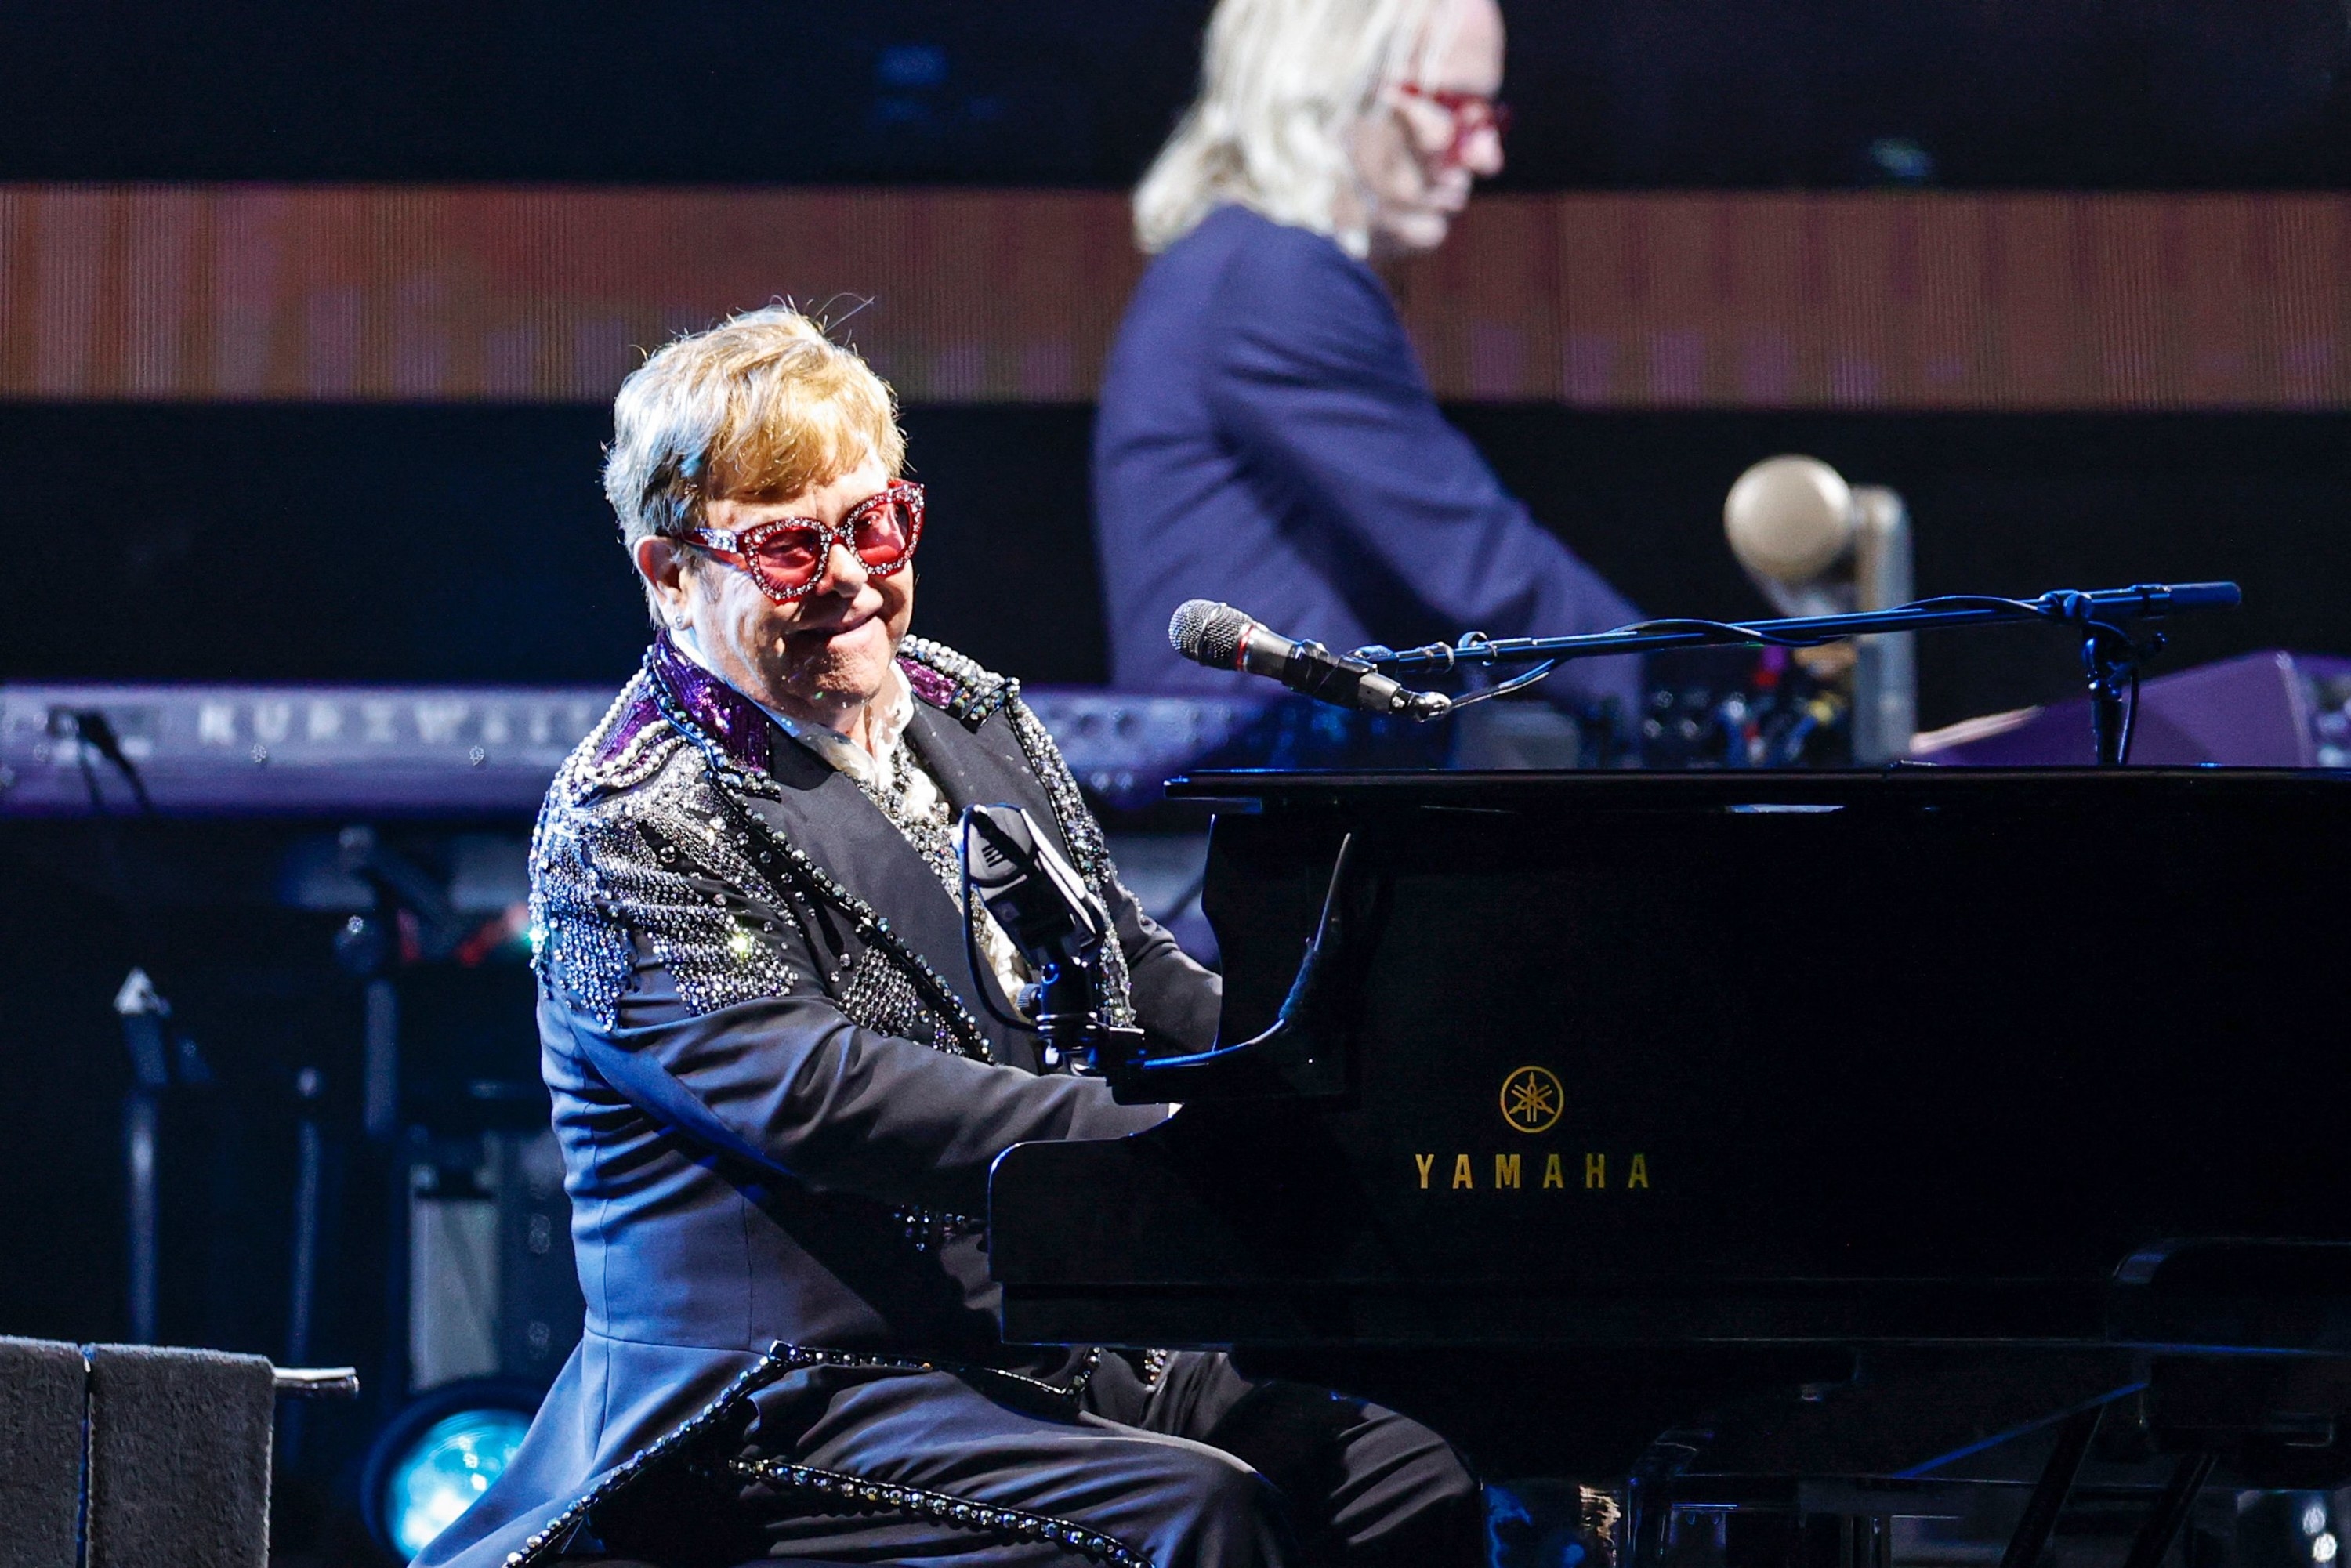 Elton John smiling and performing at the piano